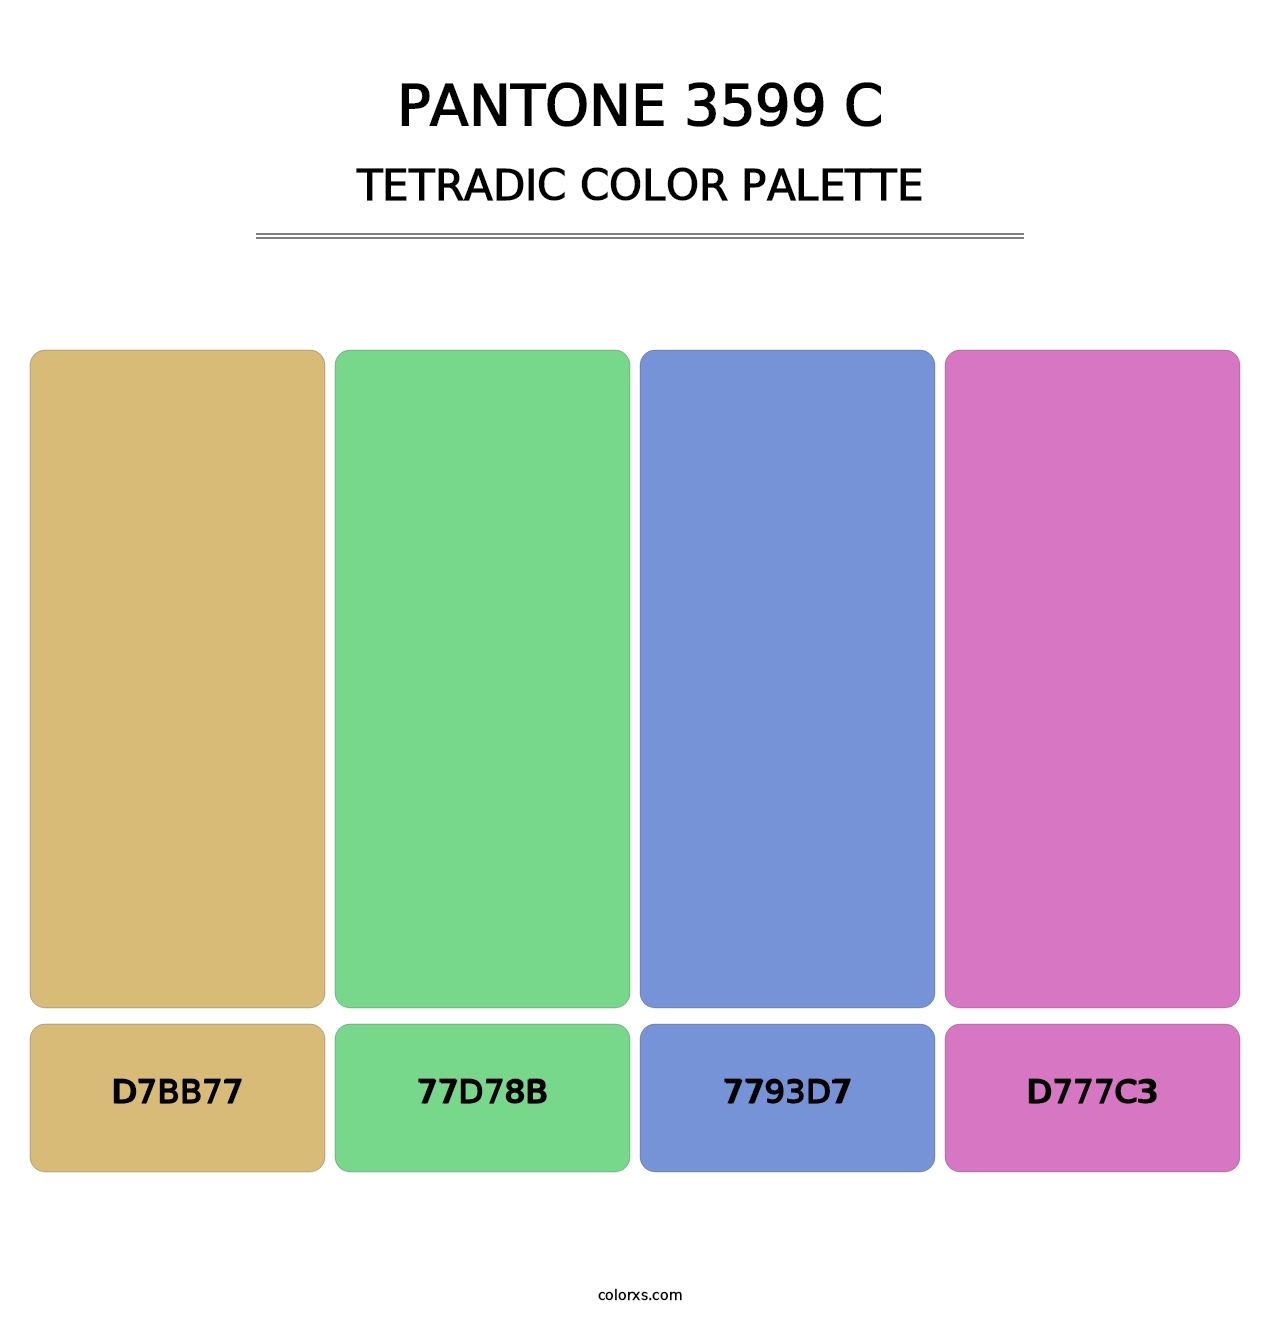 PANTONE 3599 C - Tetradic Color Palette